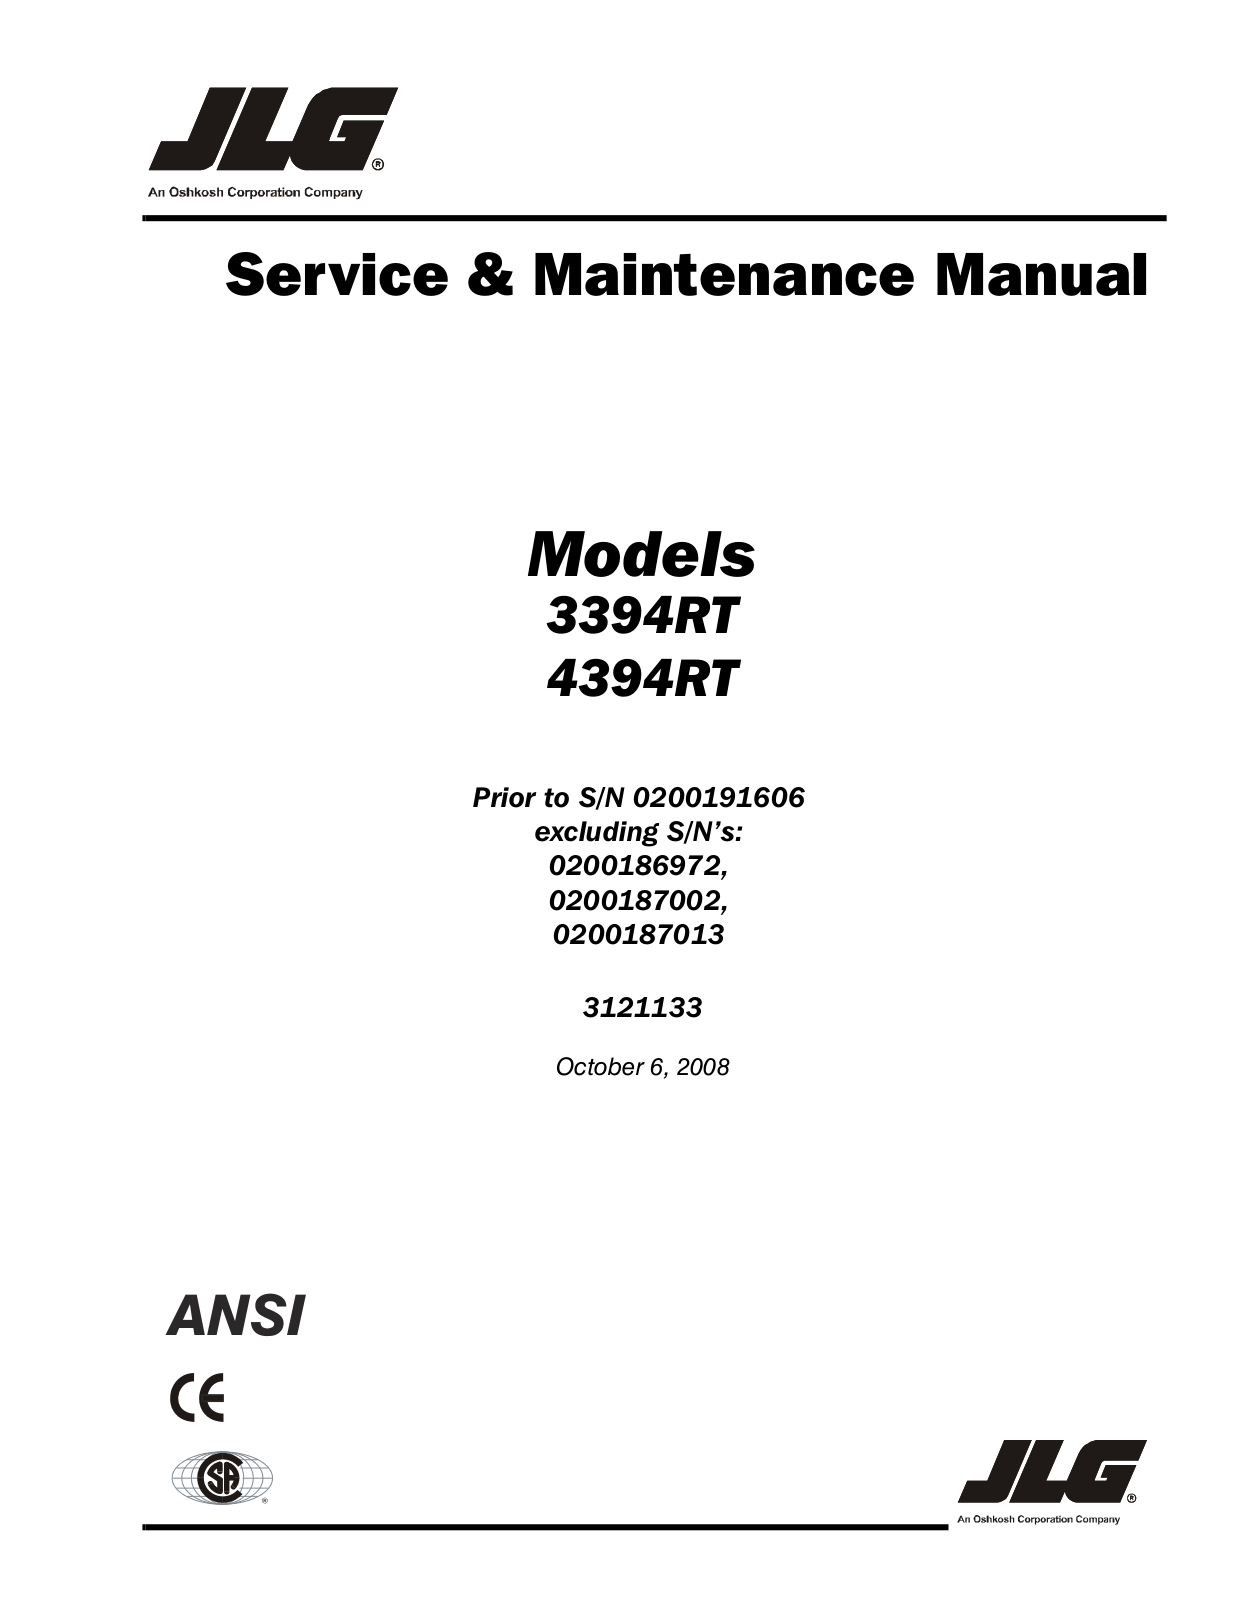 JLG 4394RT Service Manual